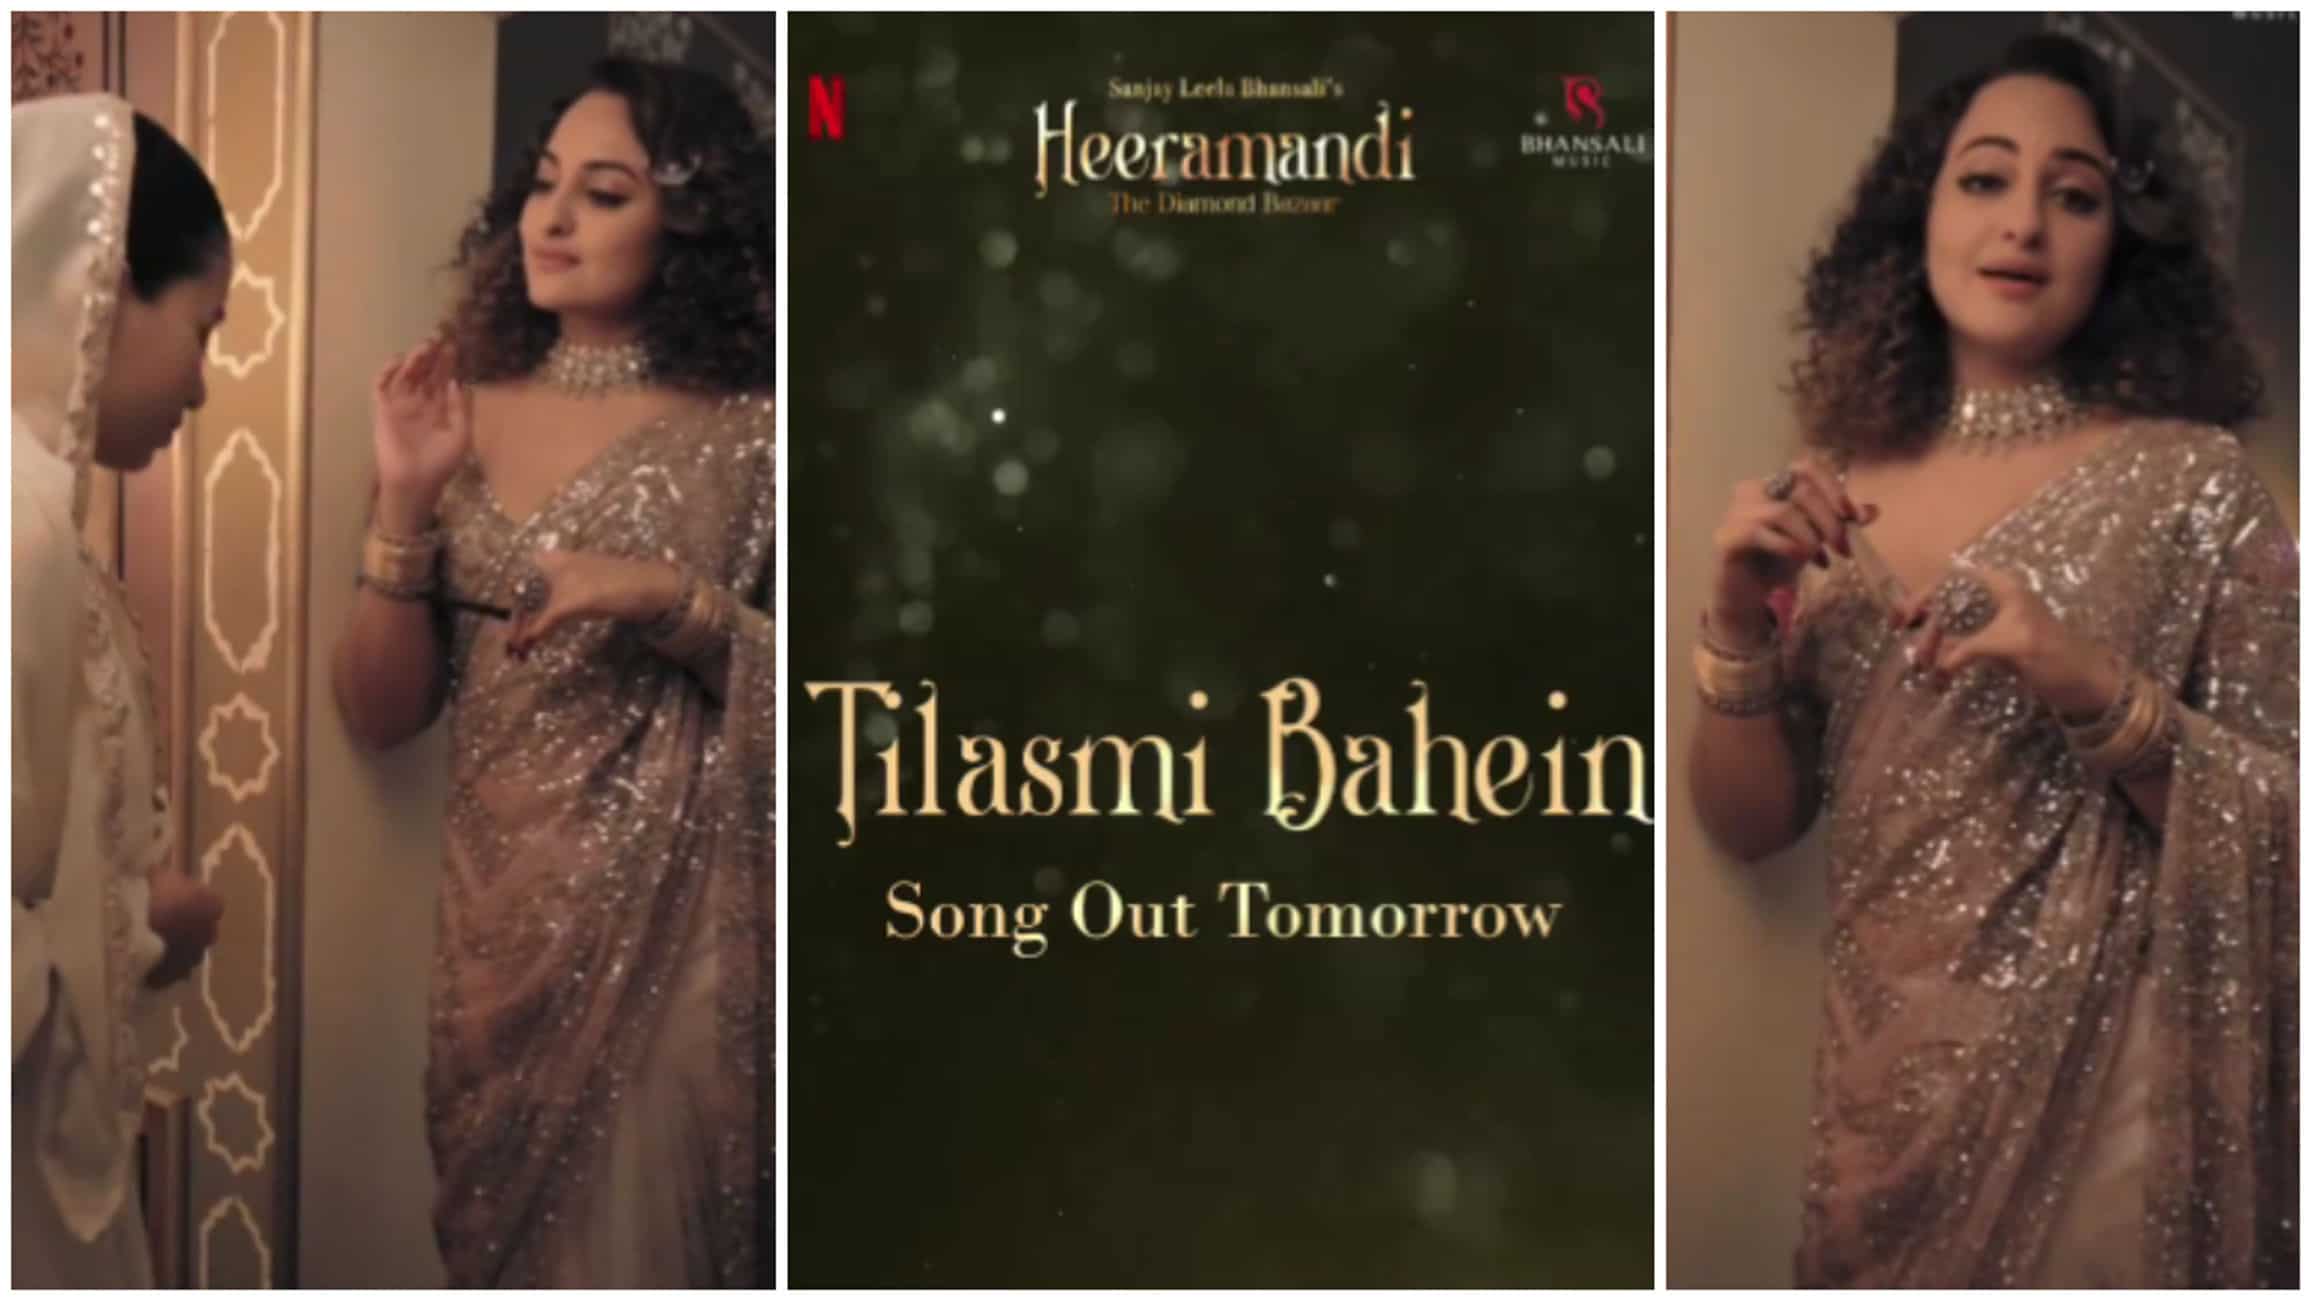 Heeramandi: The Diamond Bazaar – Sonakshi Sinha teases fans on series’ upcoming song Tilasmi Bahein | Watch